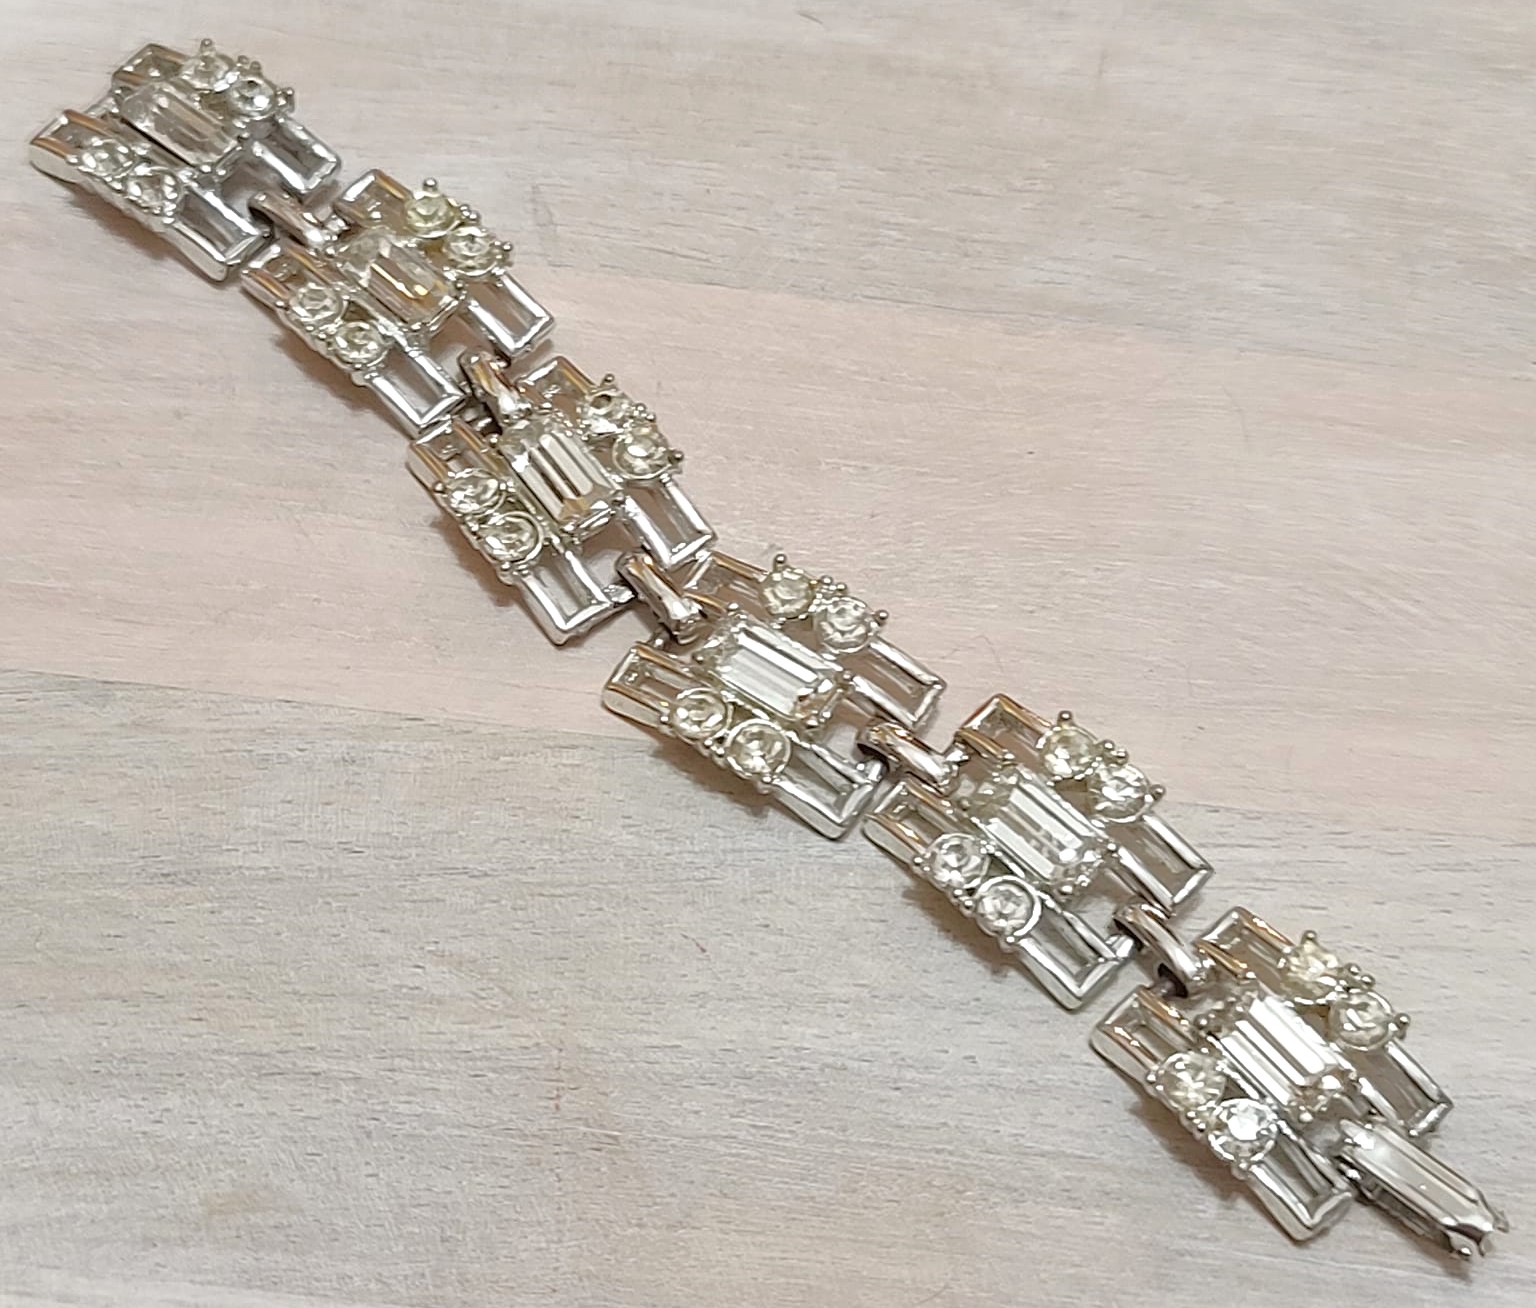 Vintage rhinestone bracelet, square link with white rhinestones